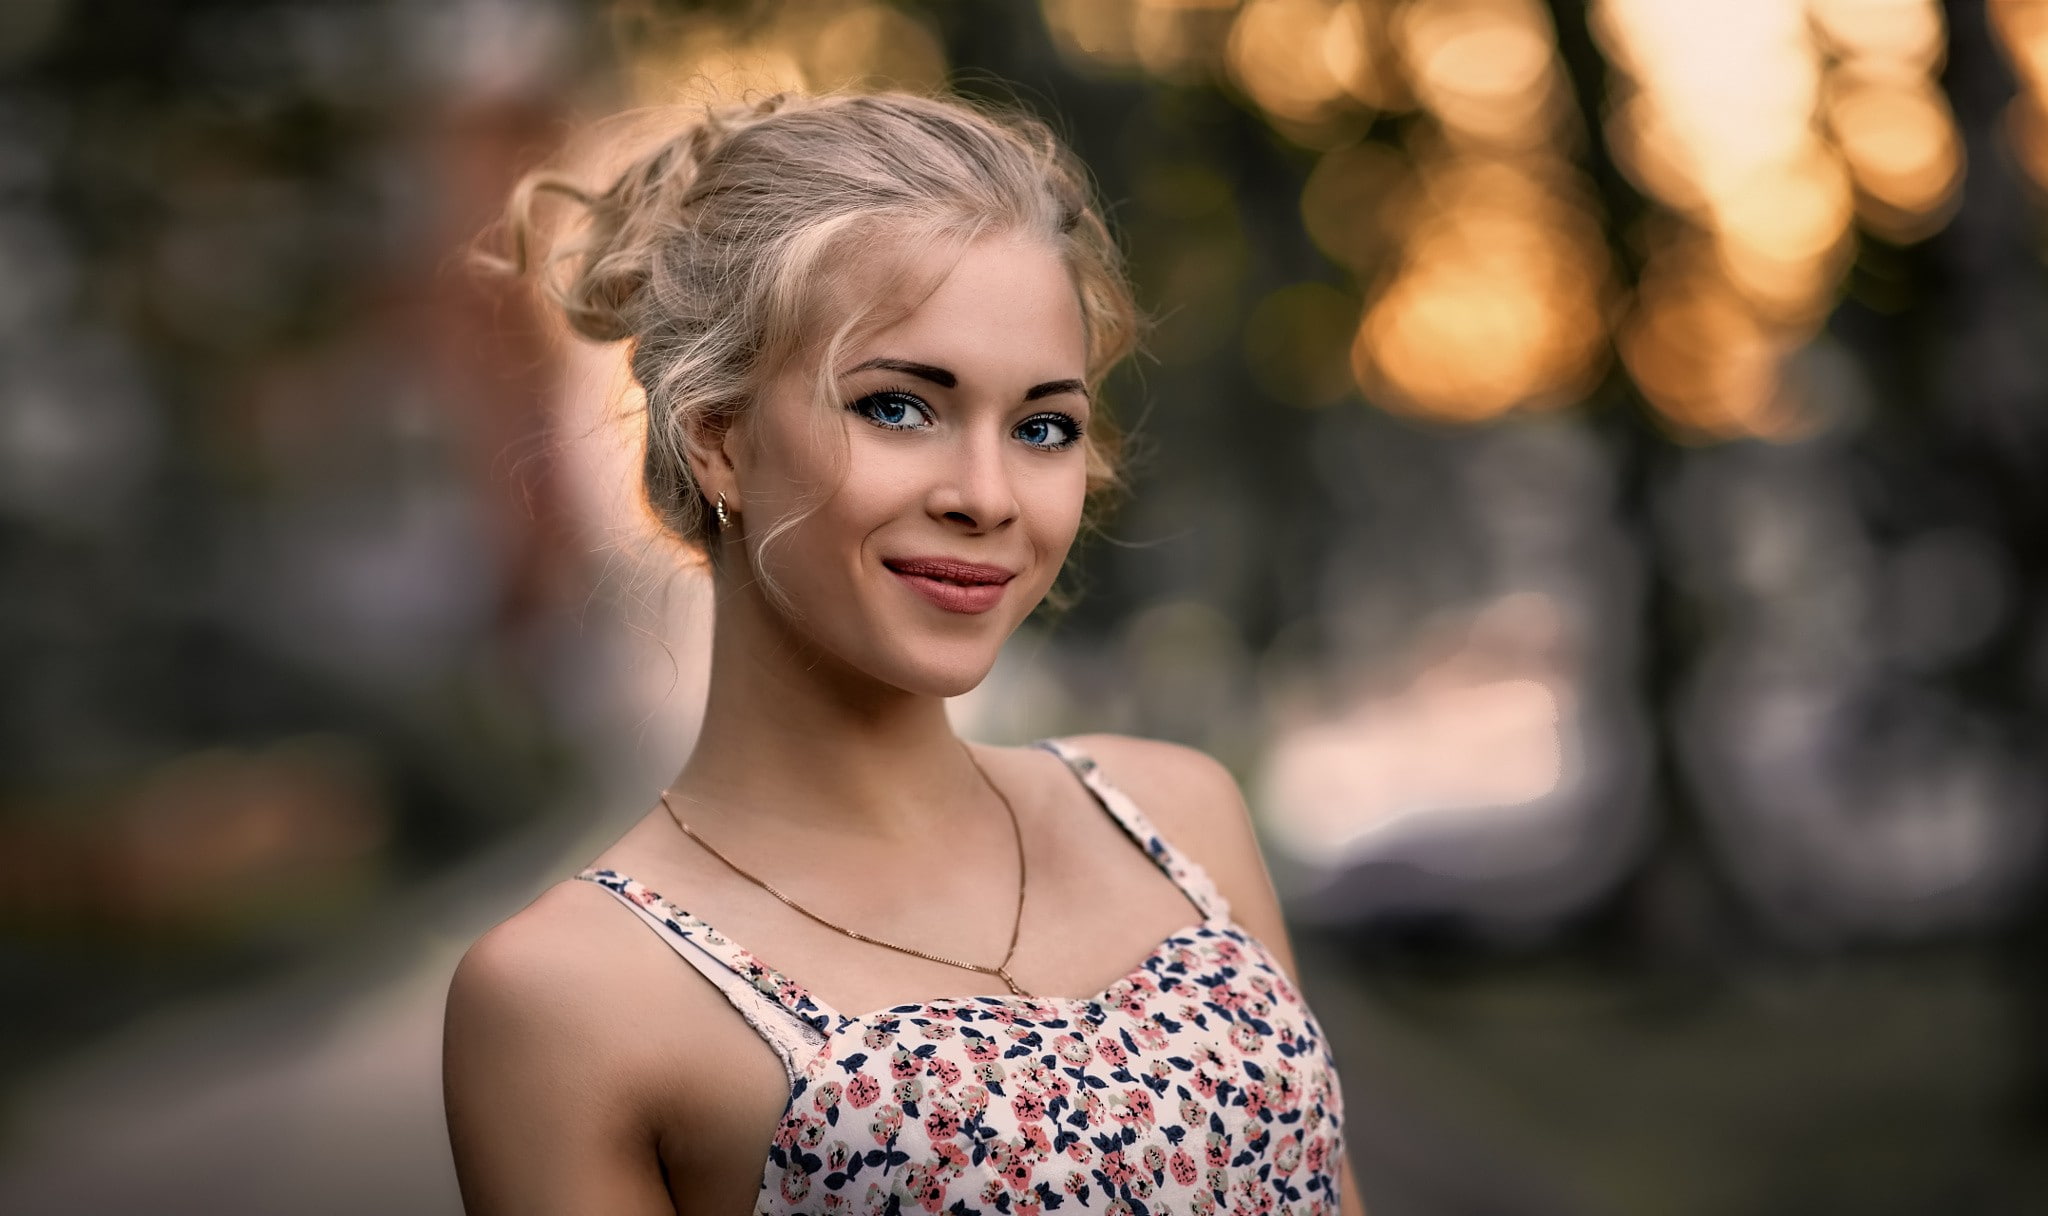 Free Download Hd Wallpaper Sergey Baryshev Blonde Women Model